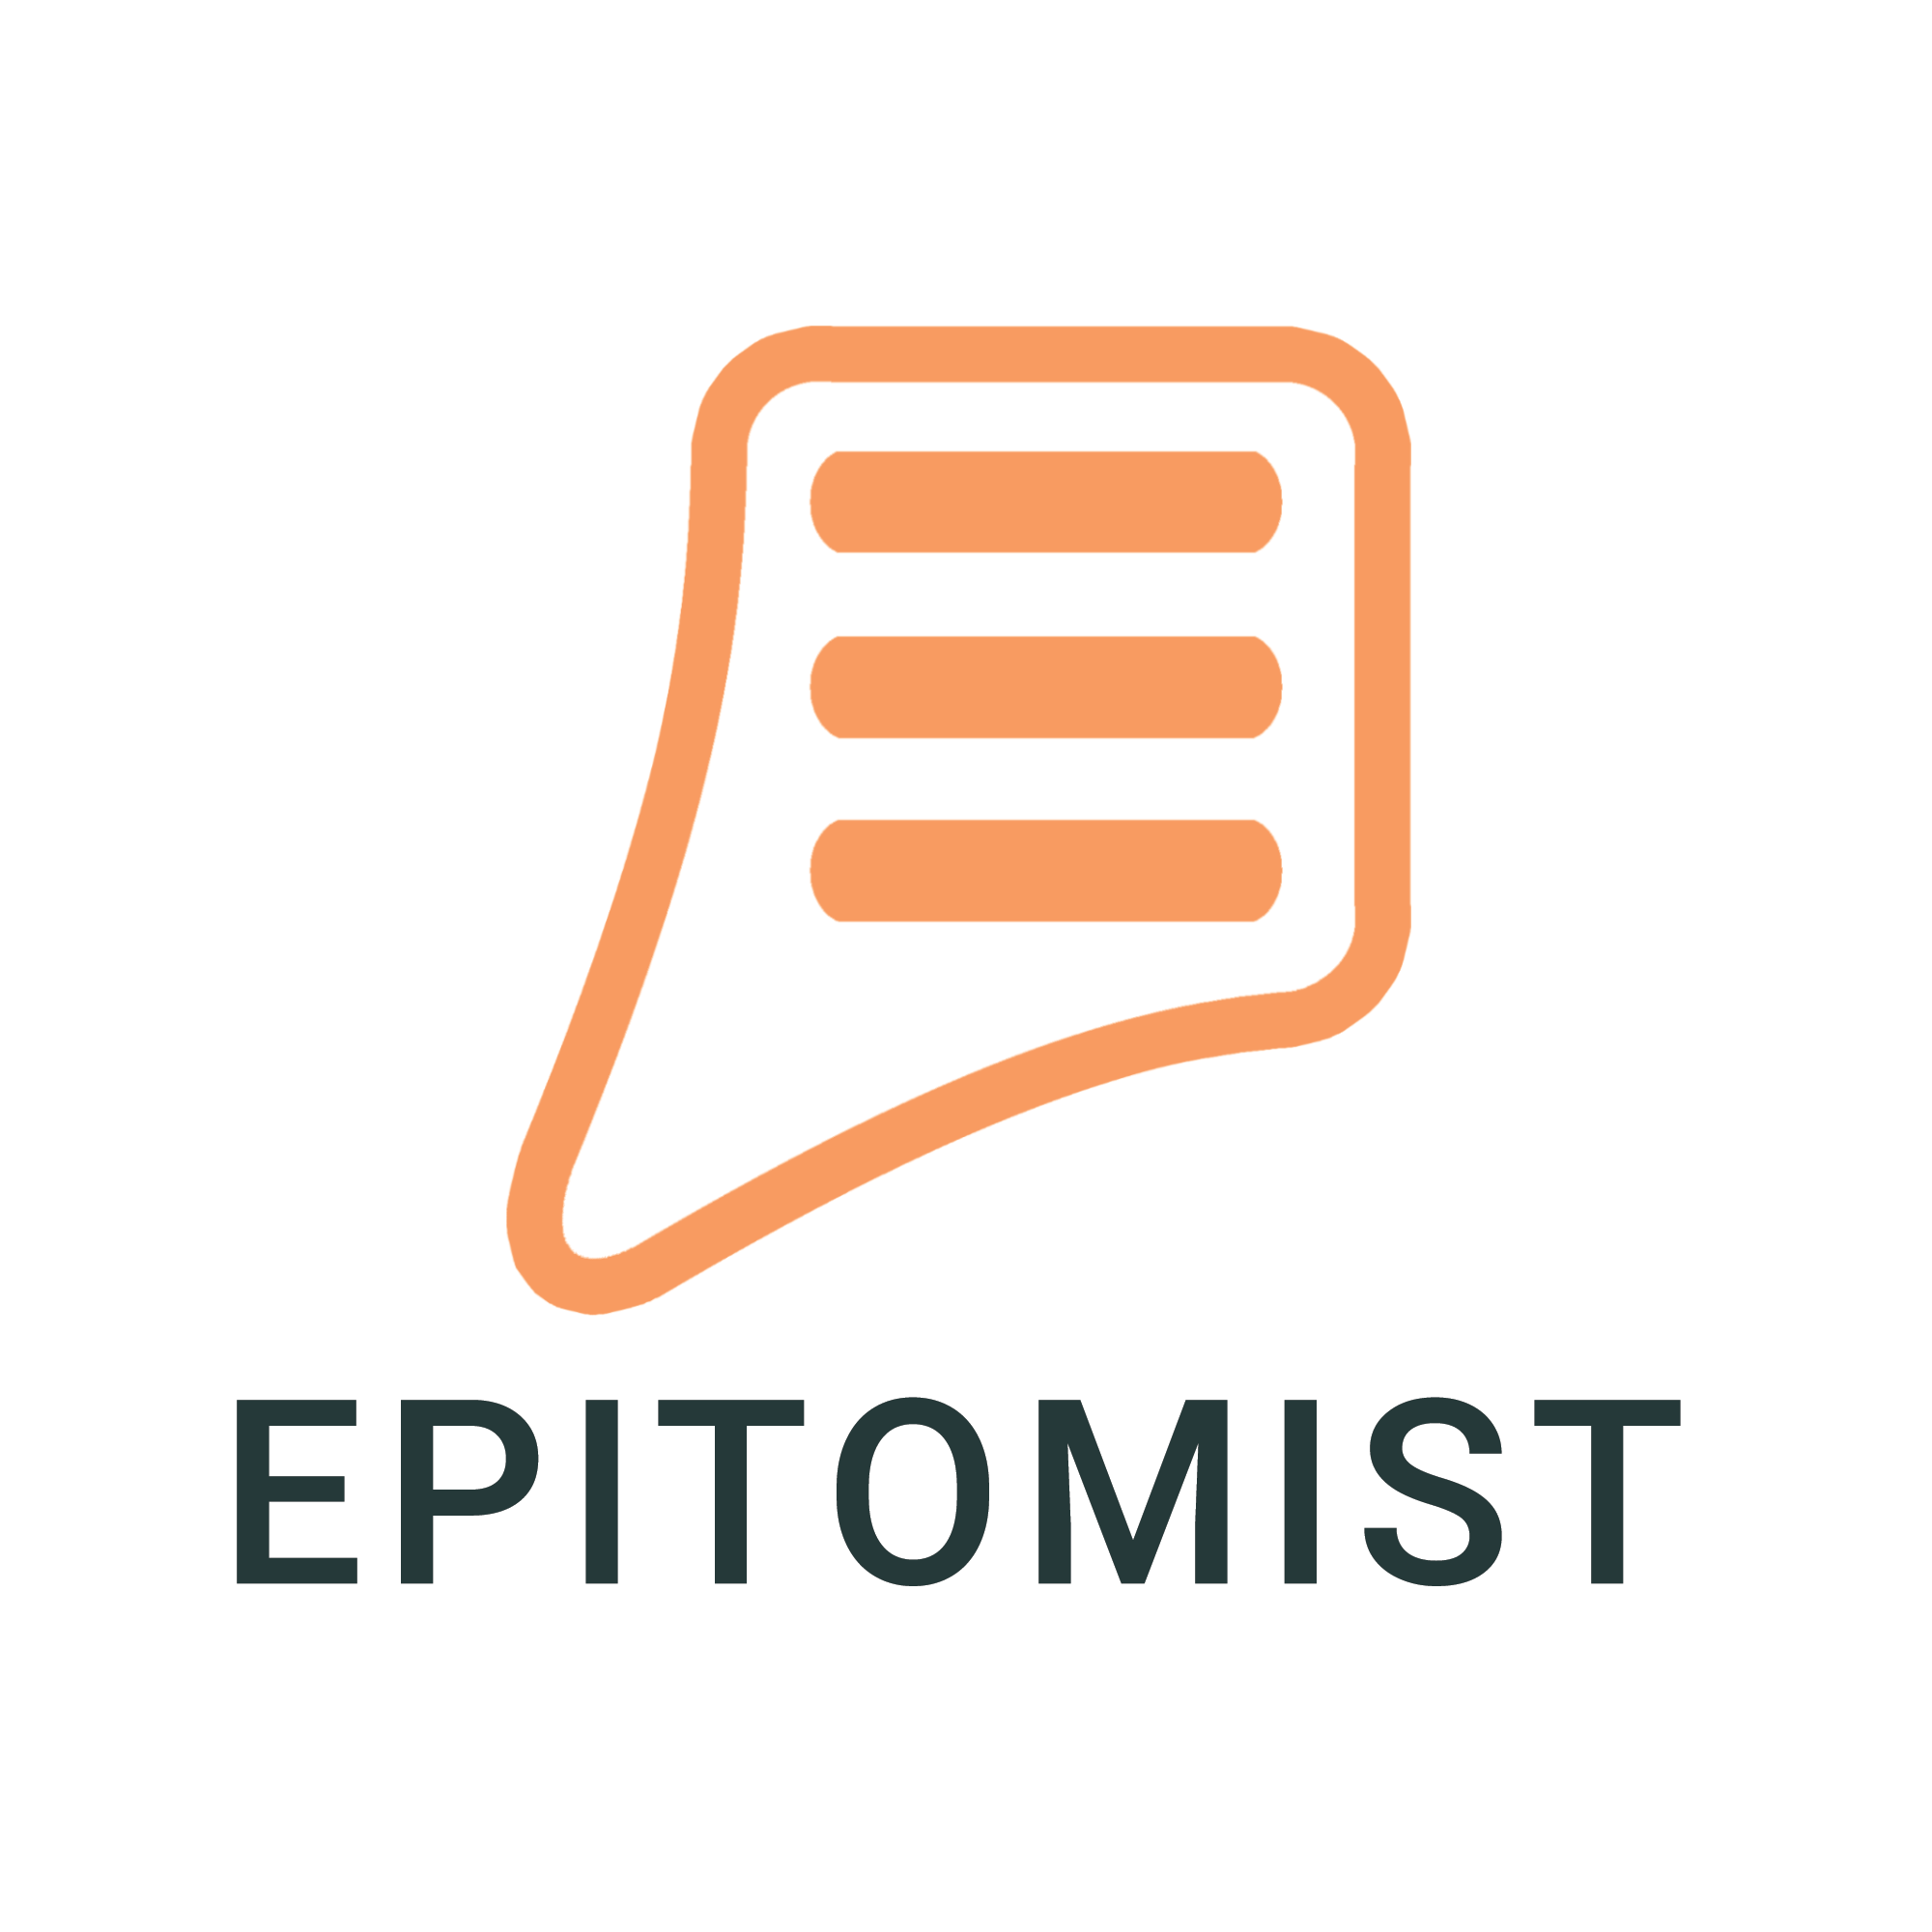 Epitomist - Asia-focused UX Agency